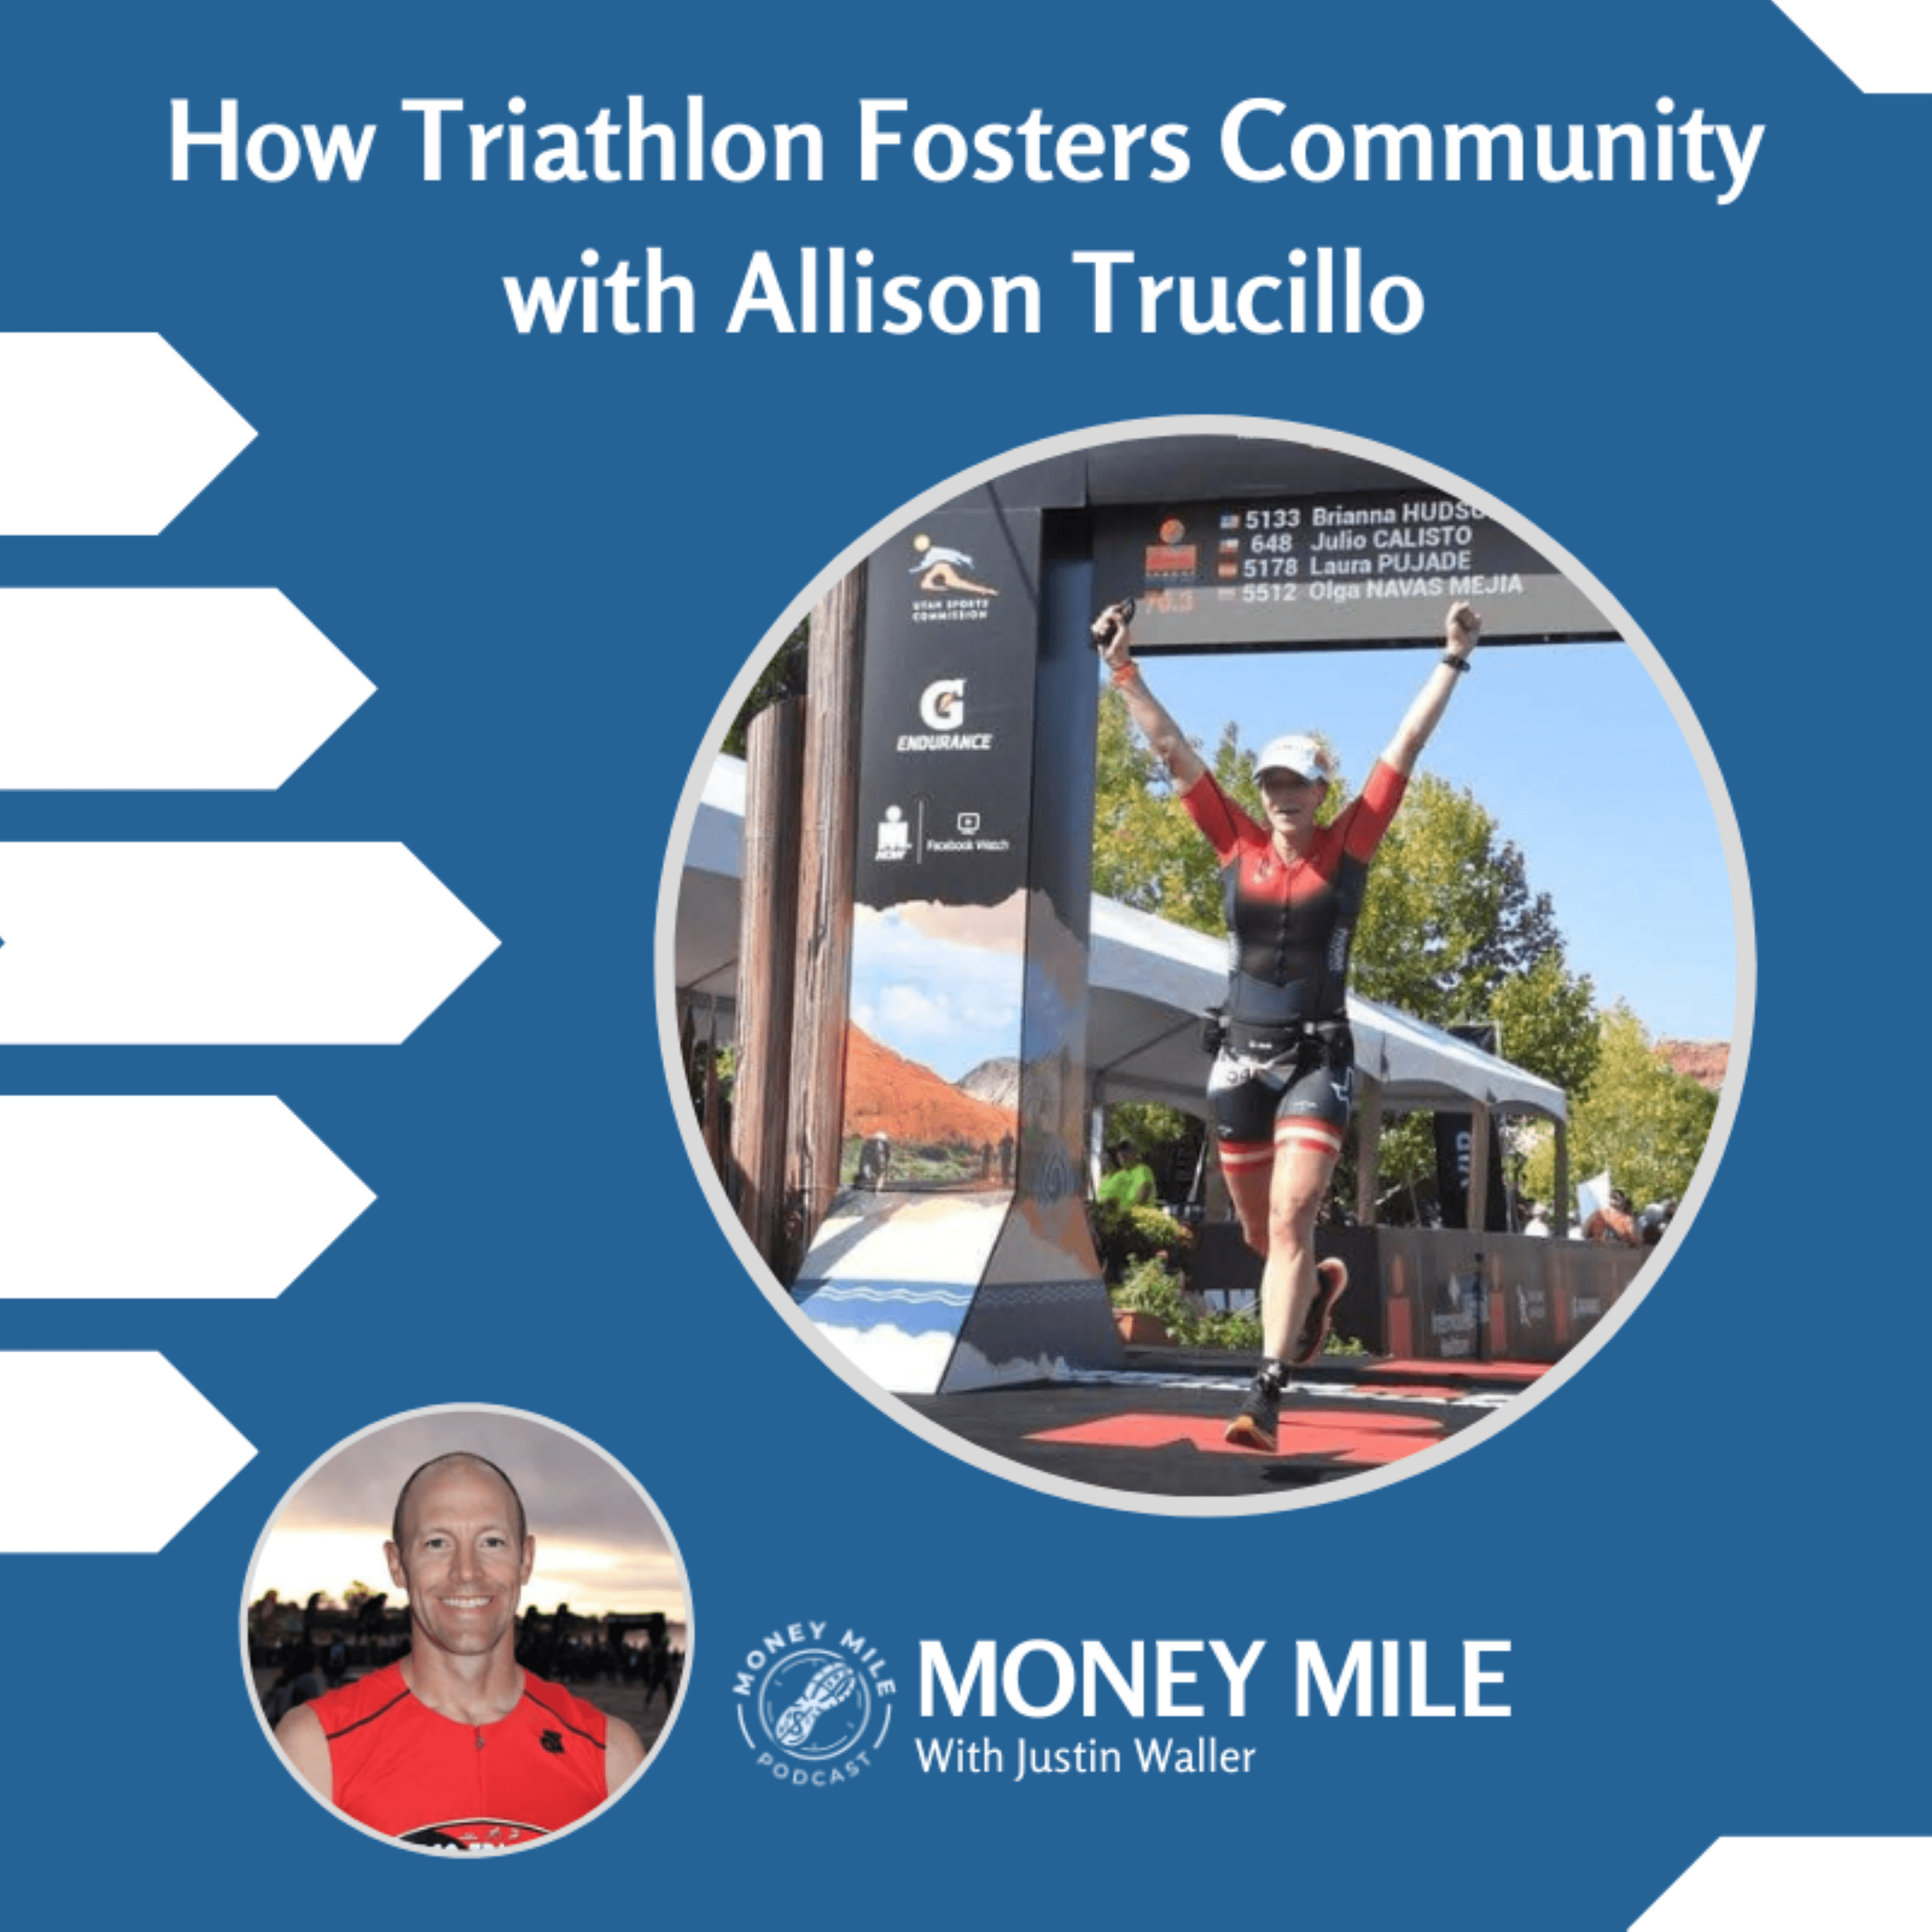 How Triathlon Fosters Community with Allison Trucillo